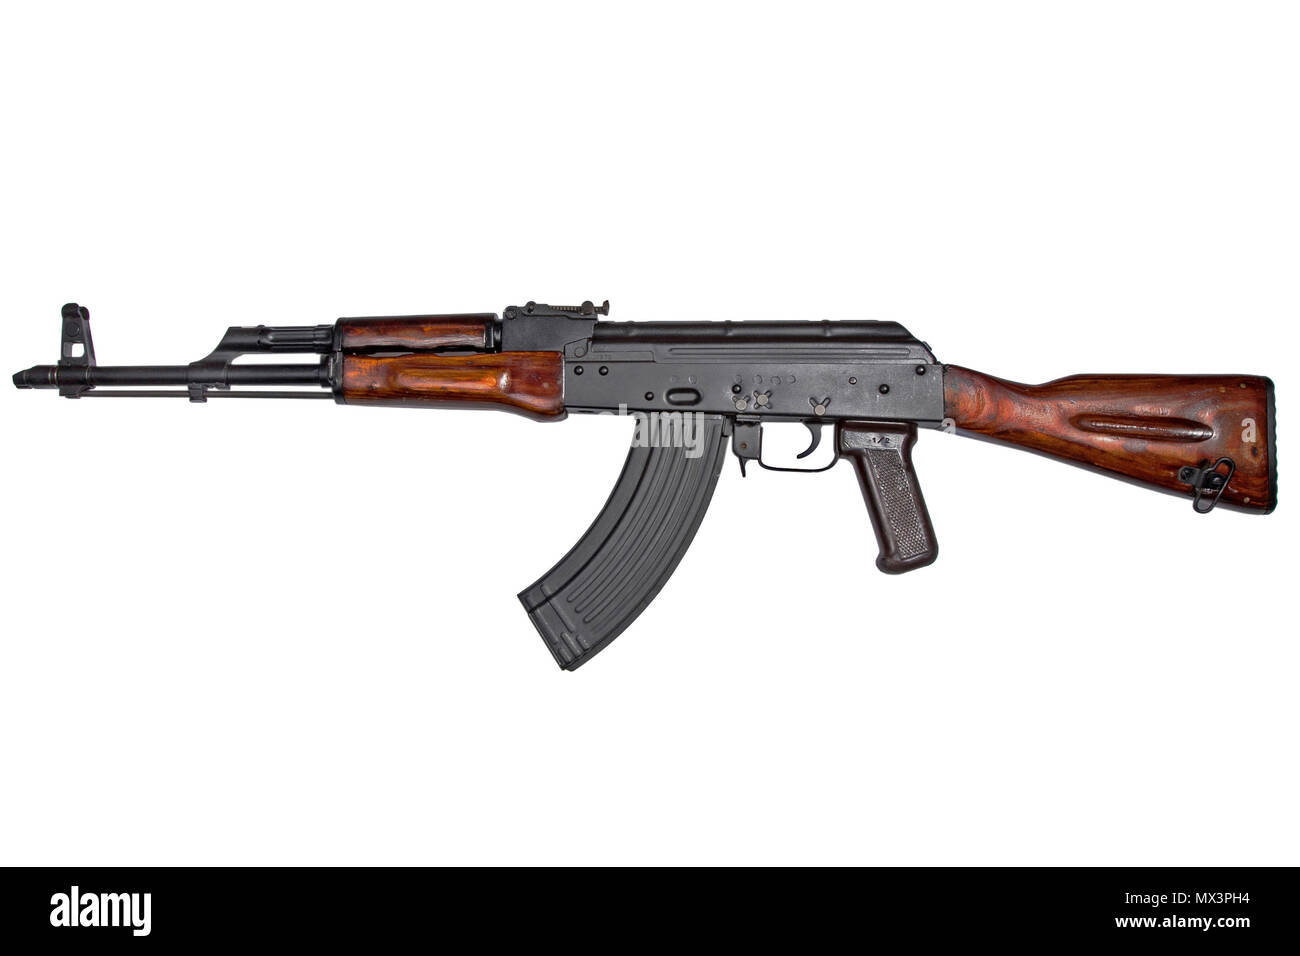 AKM Avtomat Kalashnikova Kalashnikov assault rifle on white Stock Photo